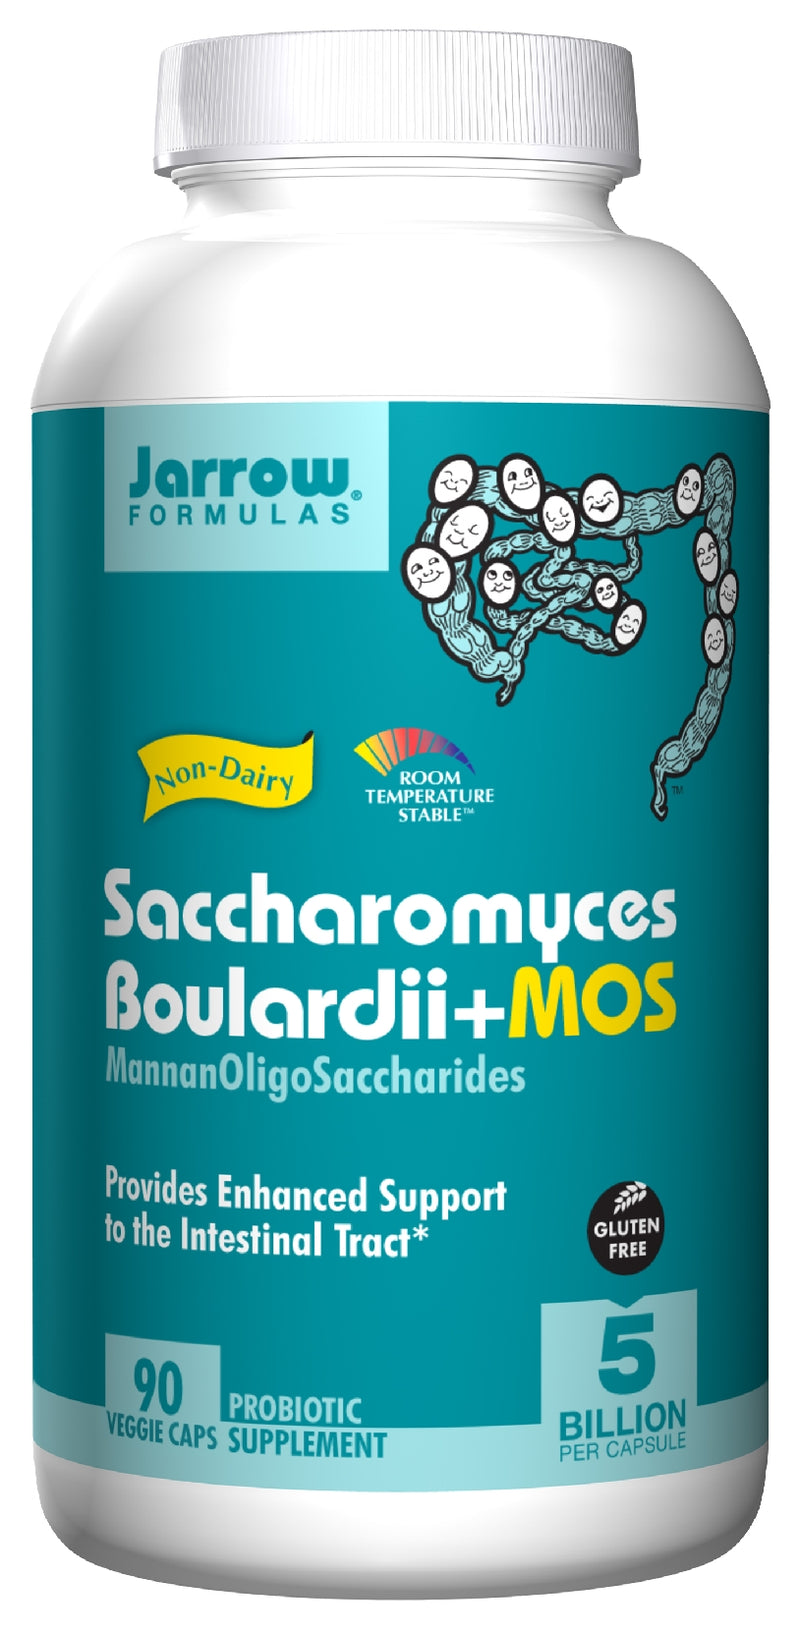 Saccharomyces Boulardii + MOS 90 Veggie Caps